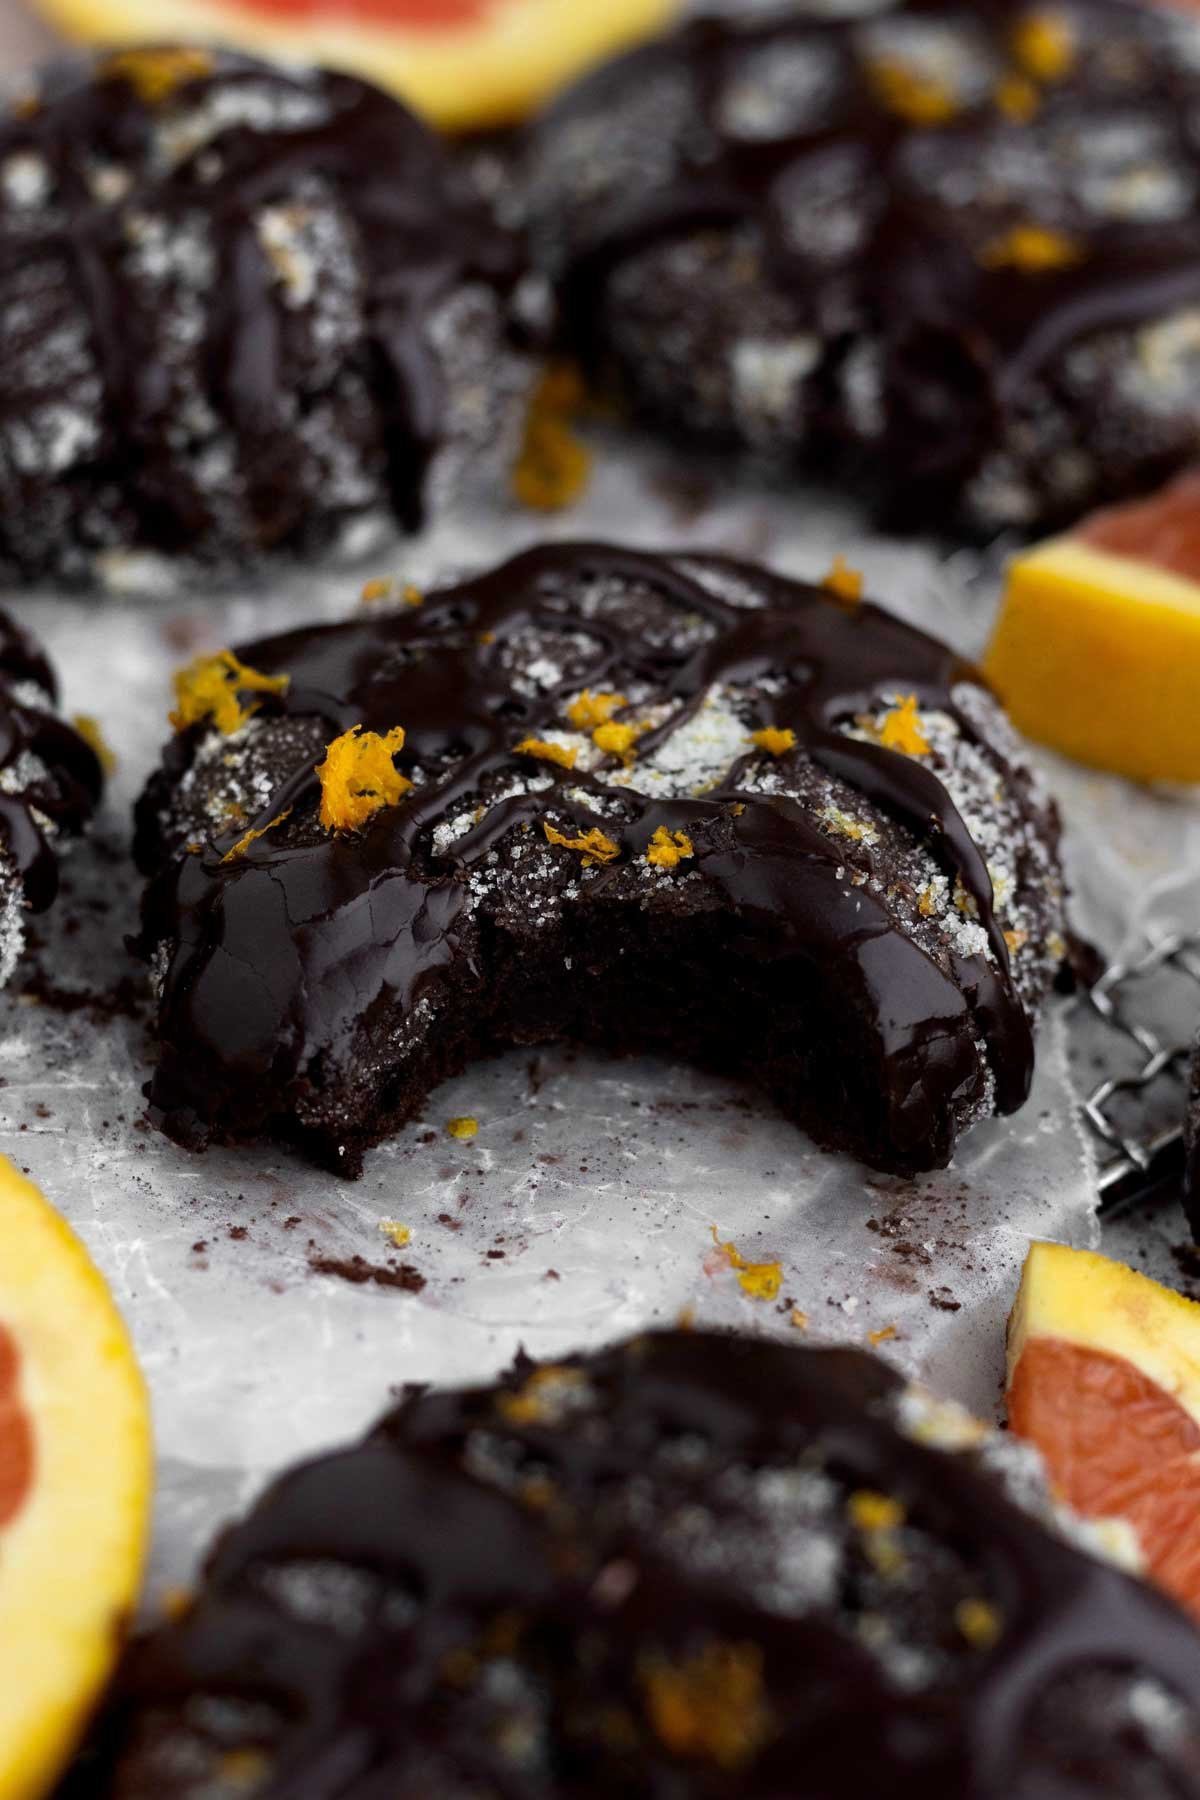 A bite through the Chocolate Orange cookie reveals a dark cozy void of a delicious interior.